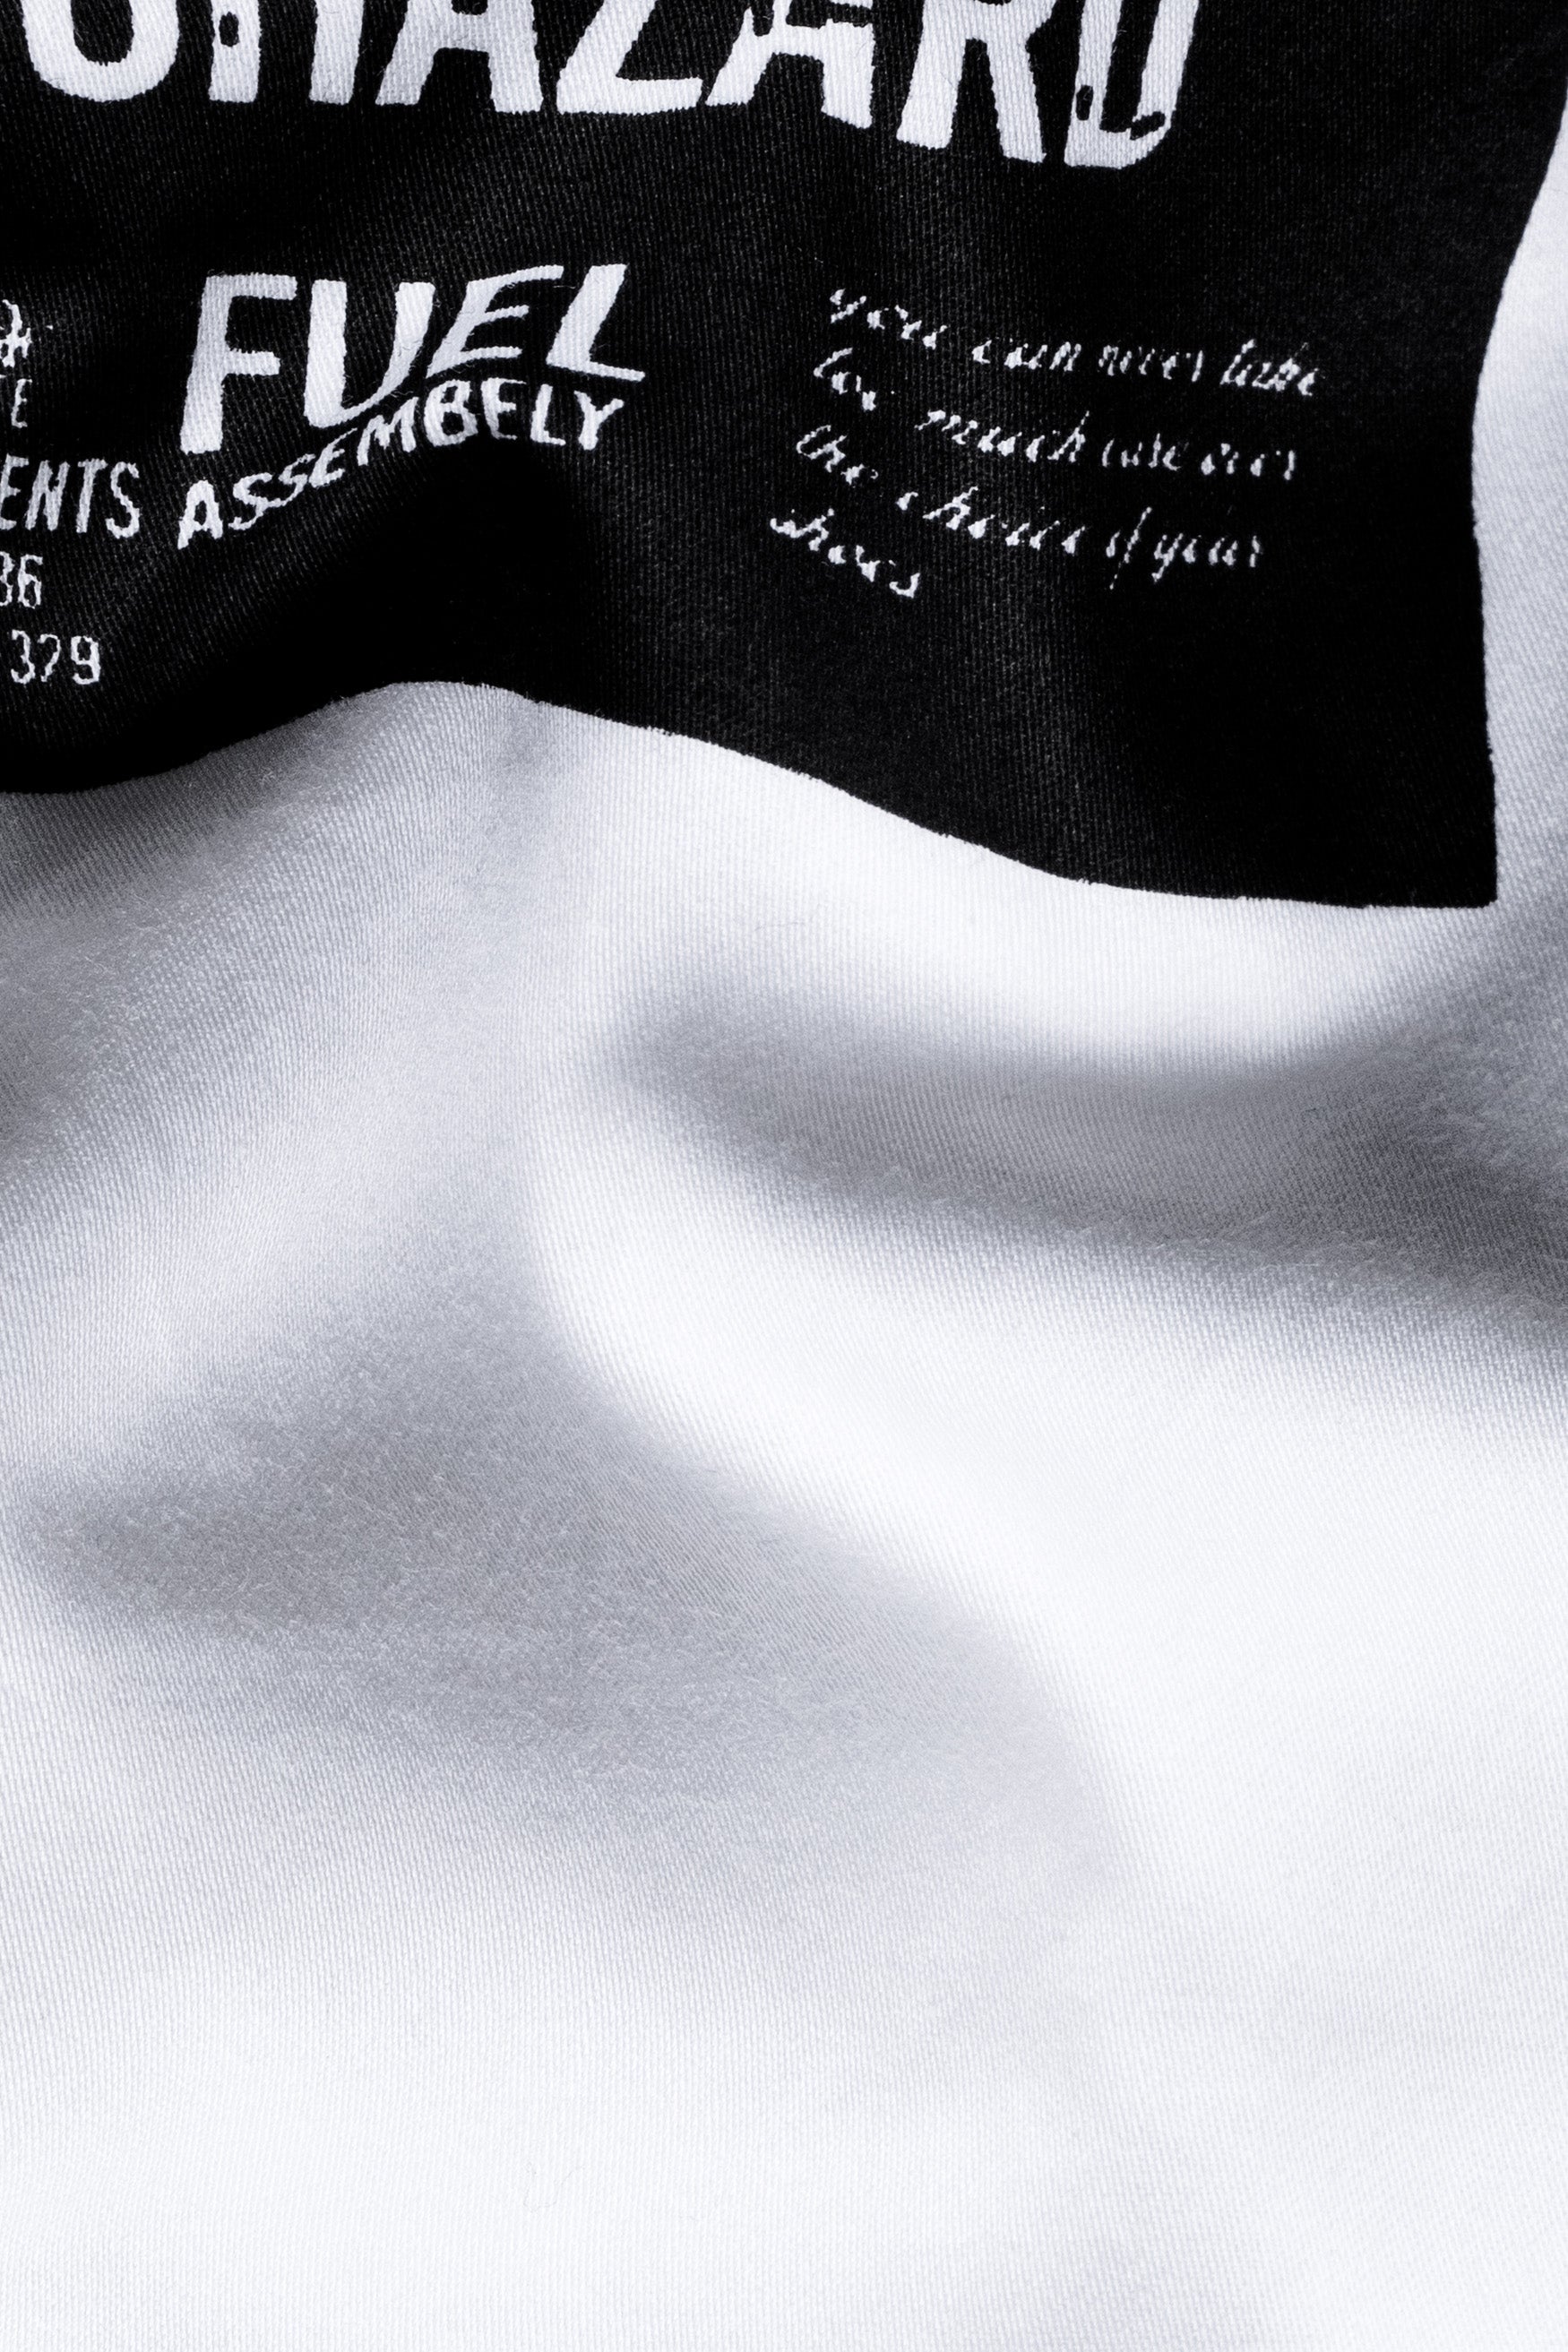 Bright White Printed Subtle Sheen Super Soft Premium Cotton Designer Shirt